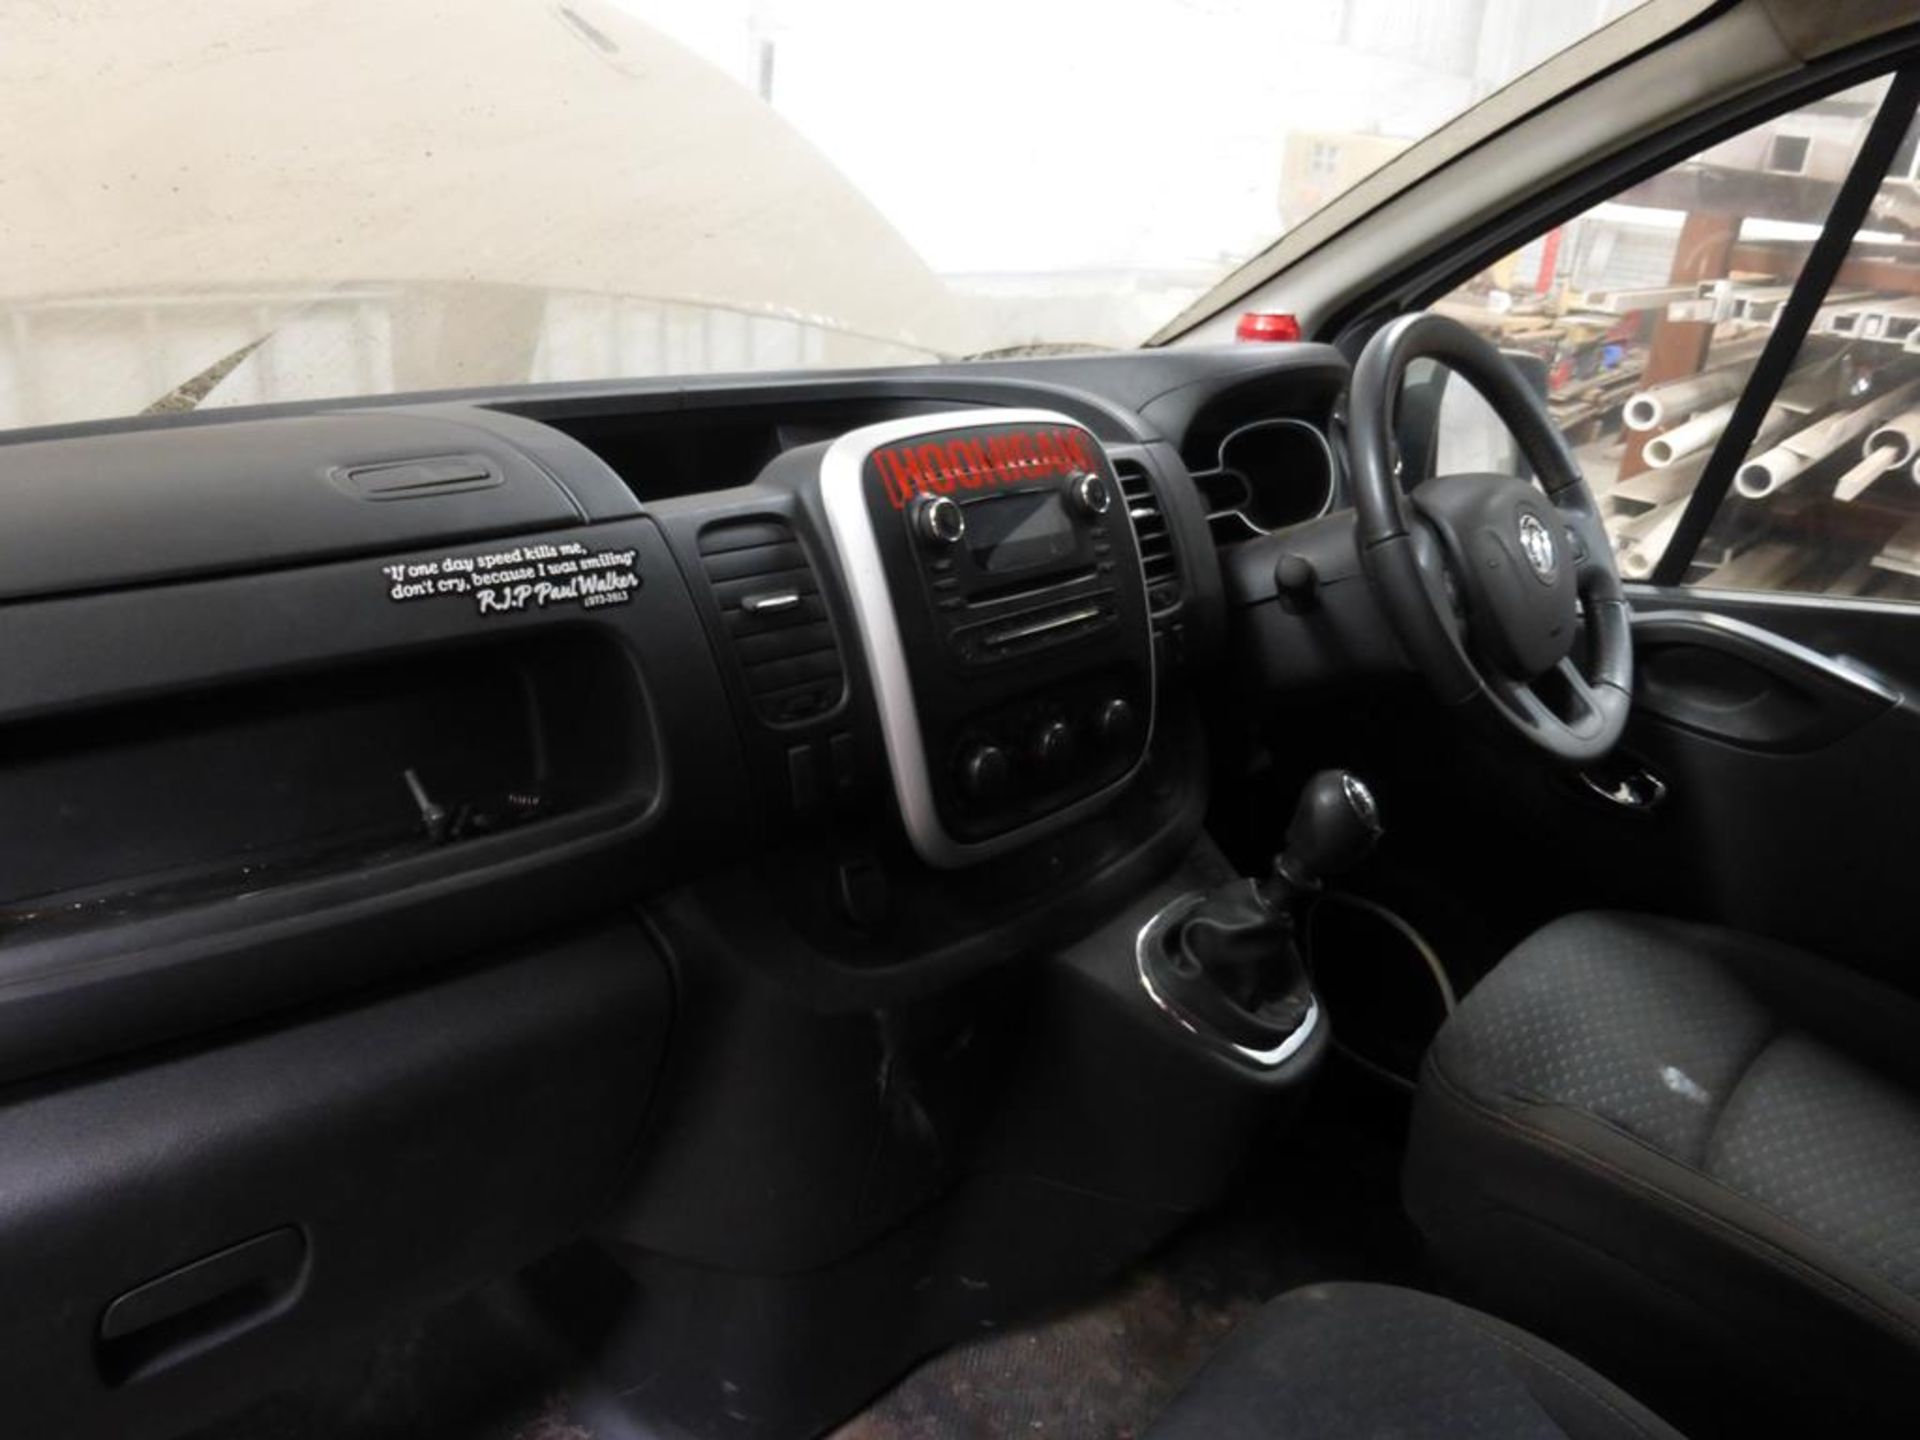 2015 Vauxhall Vivaro - Image 7 of 13